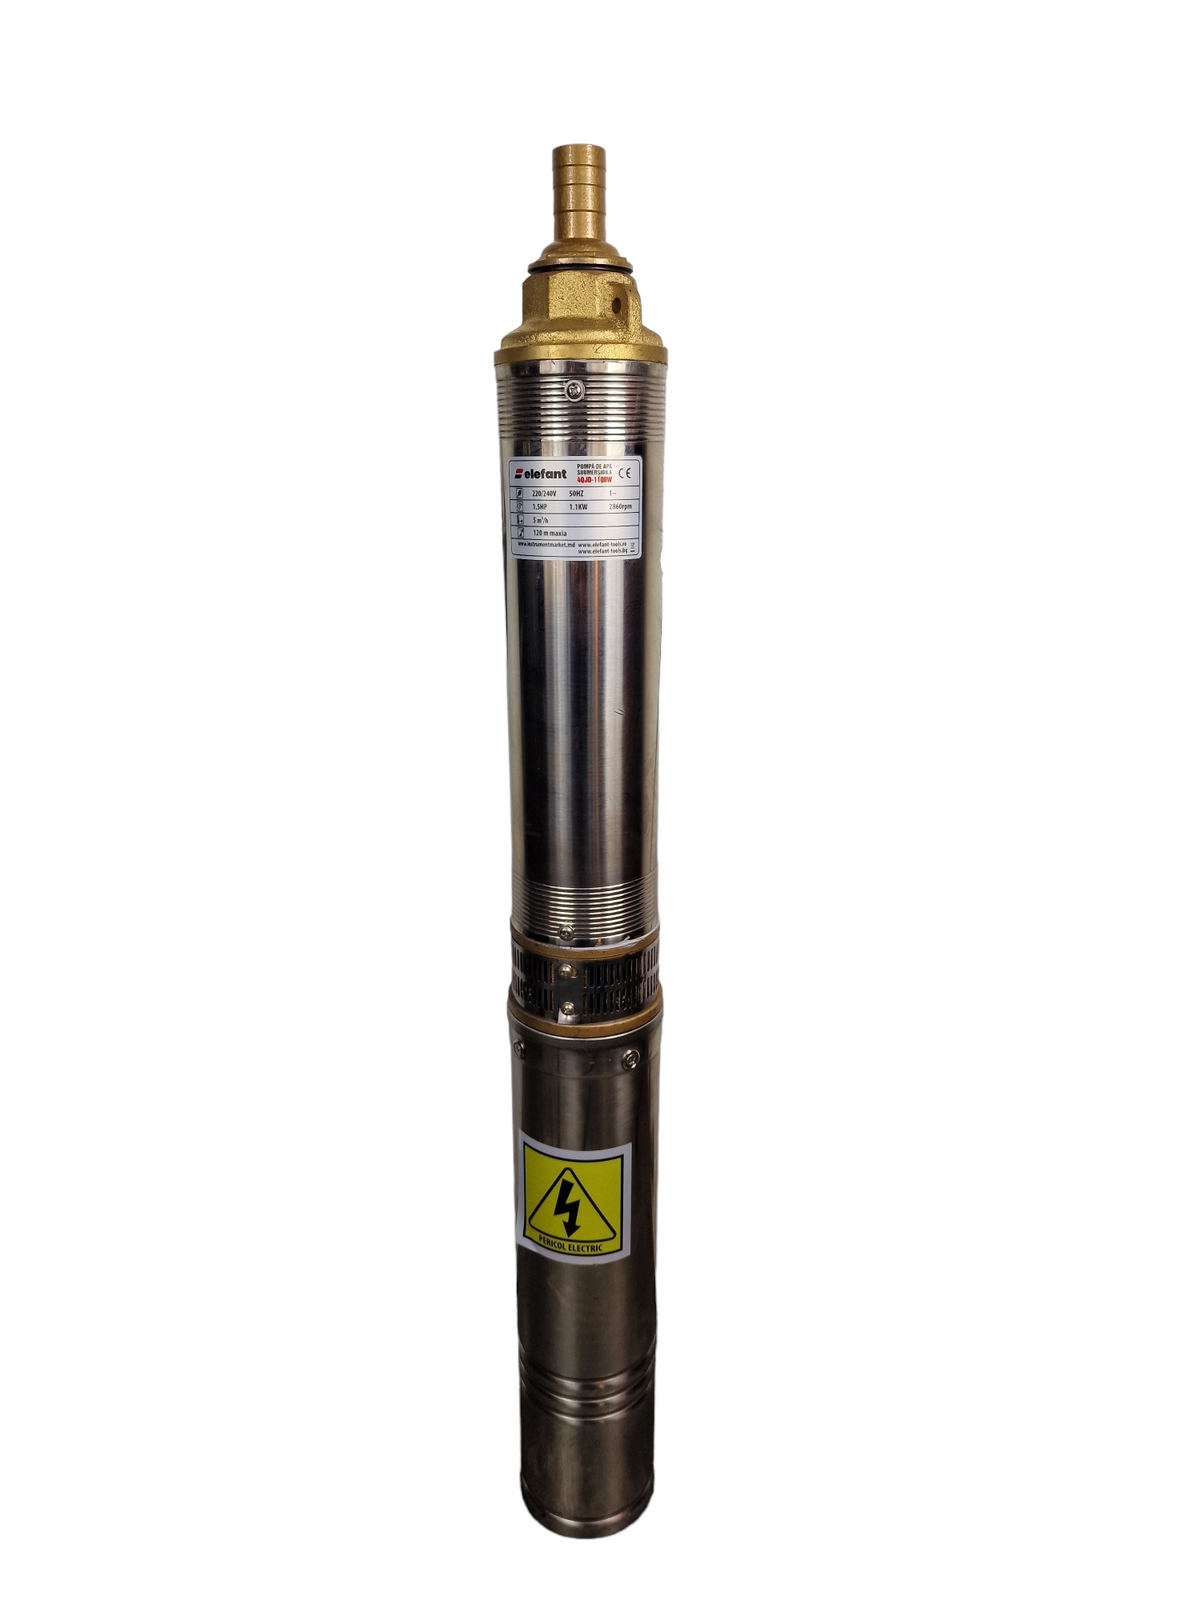 4QJD2/8-1100W pompa submersibila ELEFANT, produsul contine taxa TV 5.5 lei